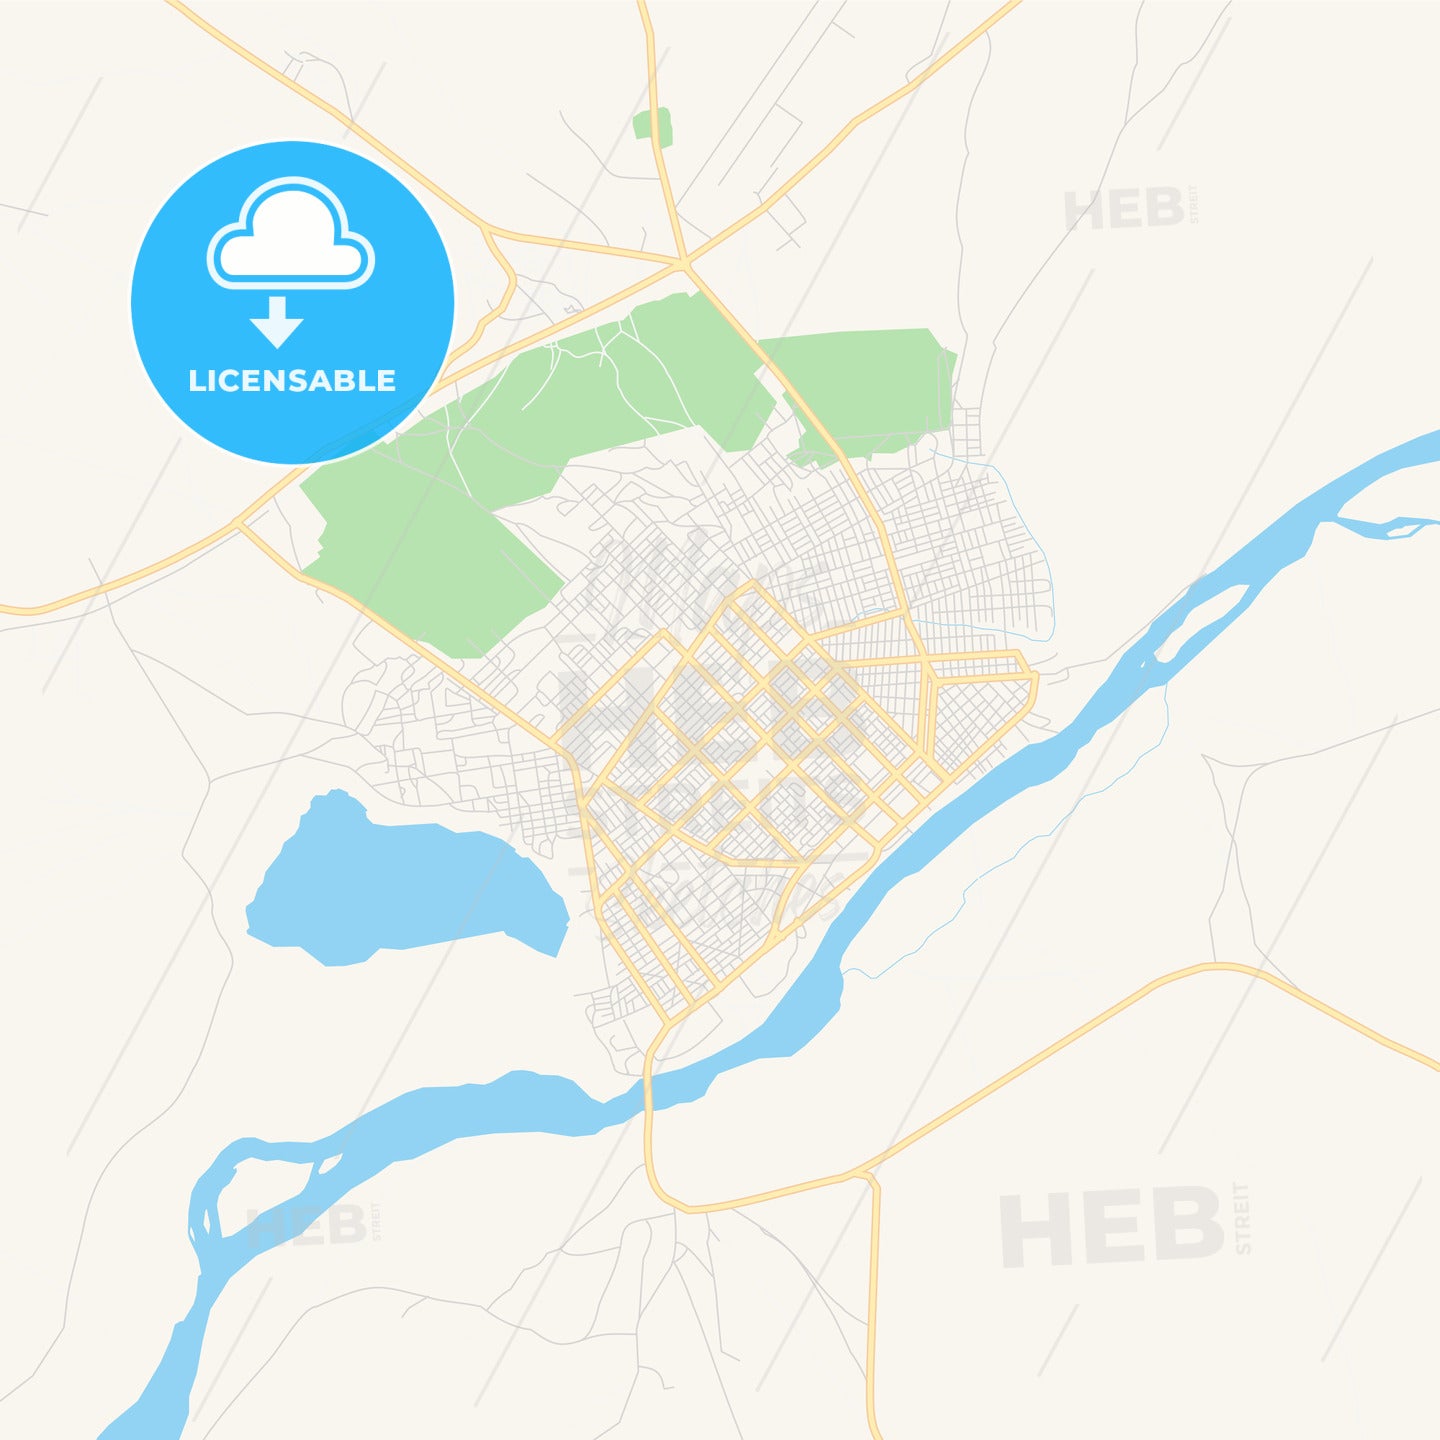 Printable street map of Moundou, Chad